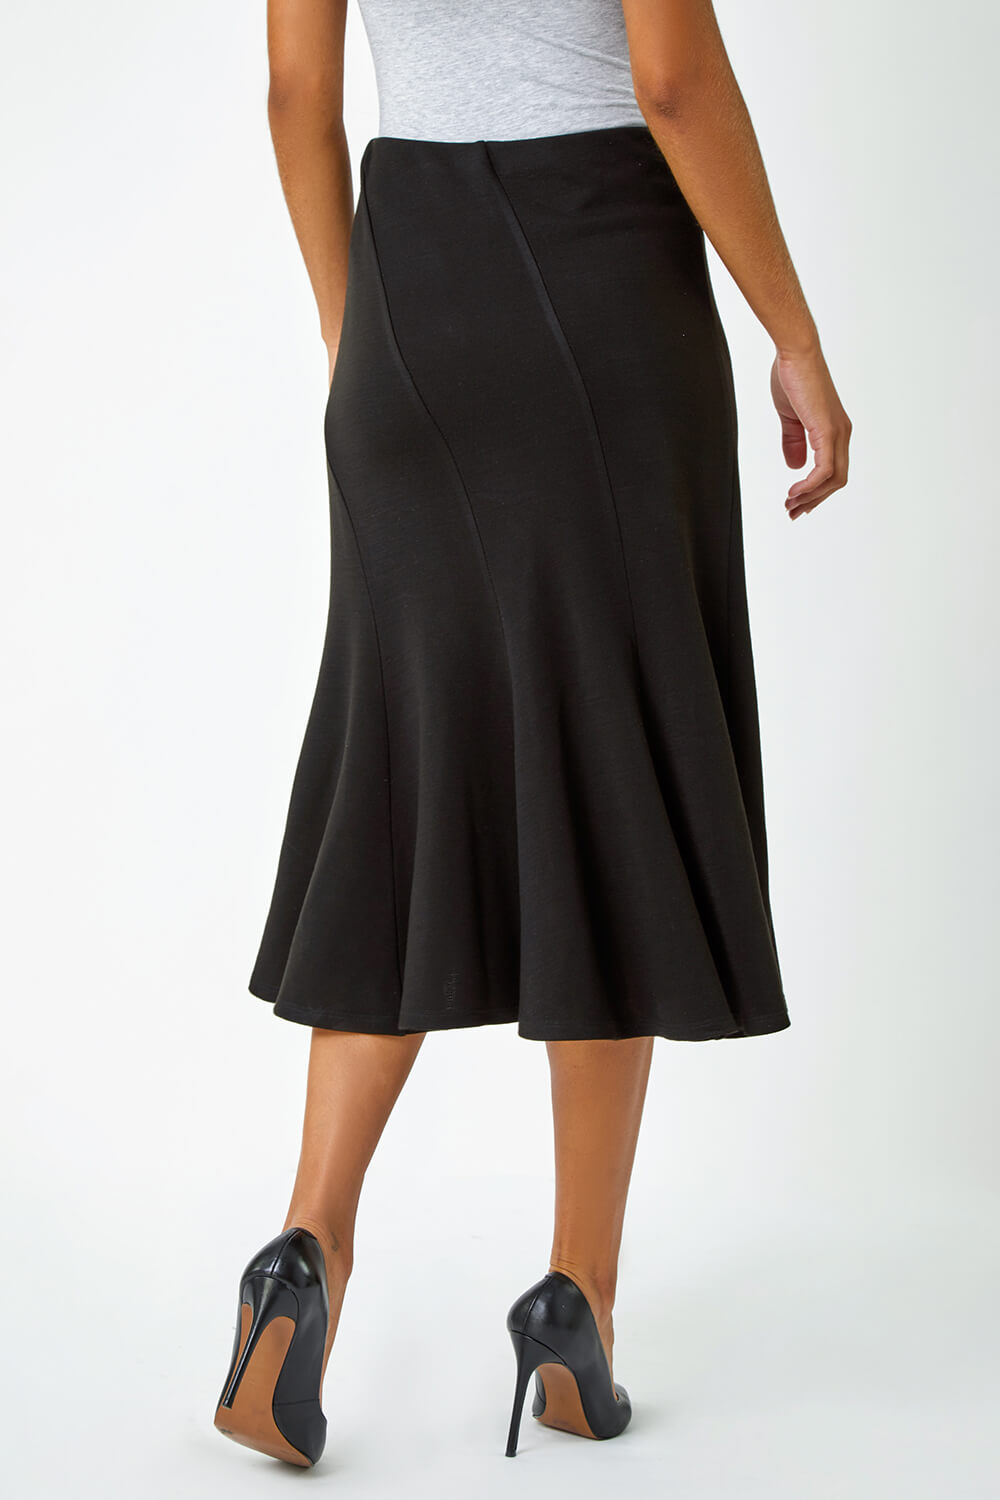 Black Panelled Flared Midi Stretch Skirt, Image 3 of 5